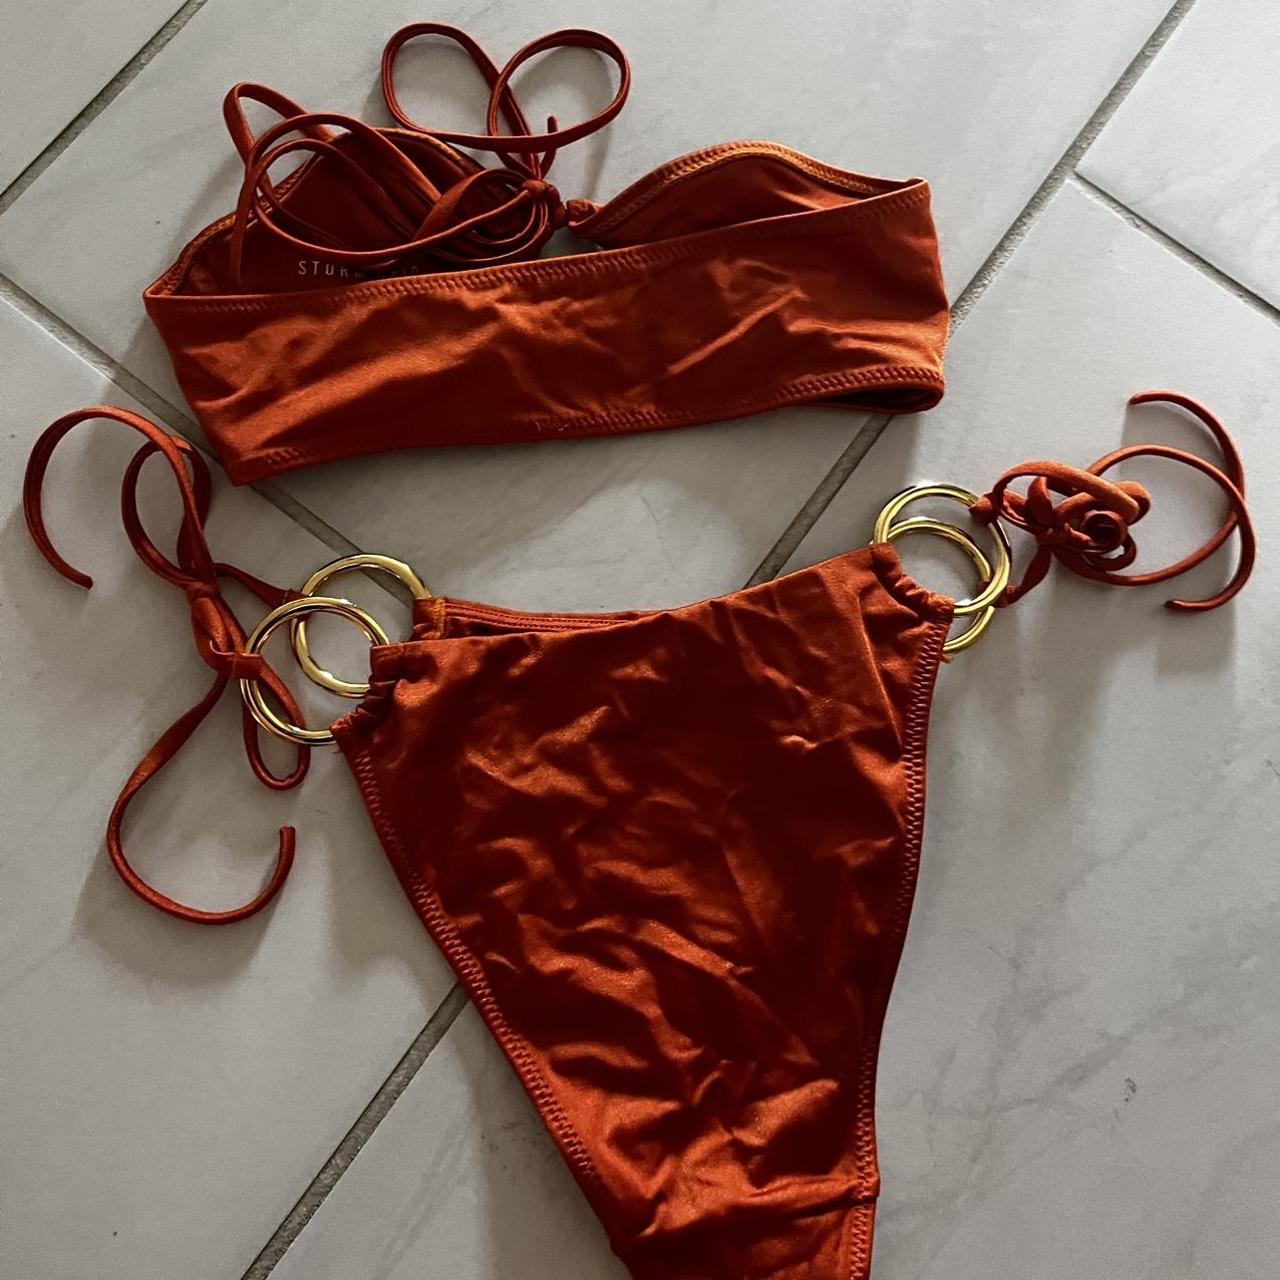 PacSun Women's Orange Bikinis-and-tankini-sets (2)